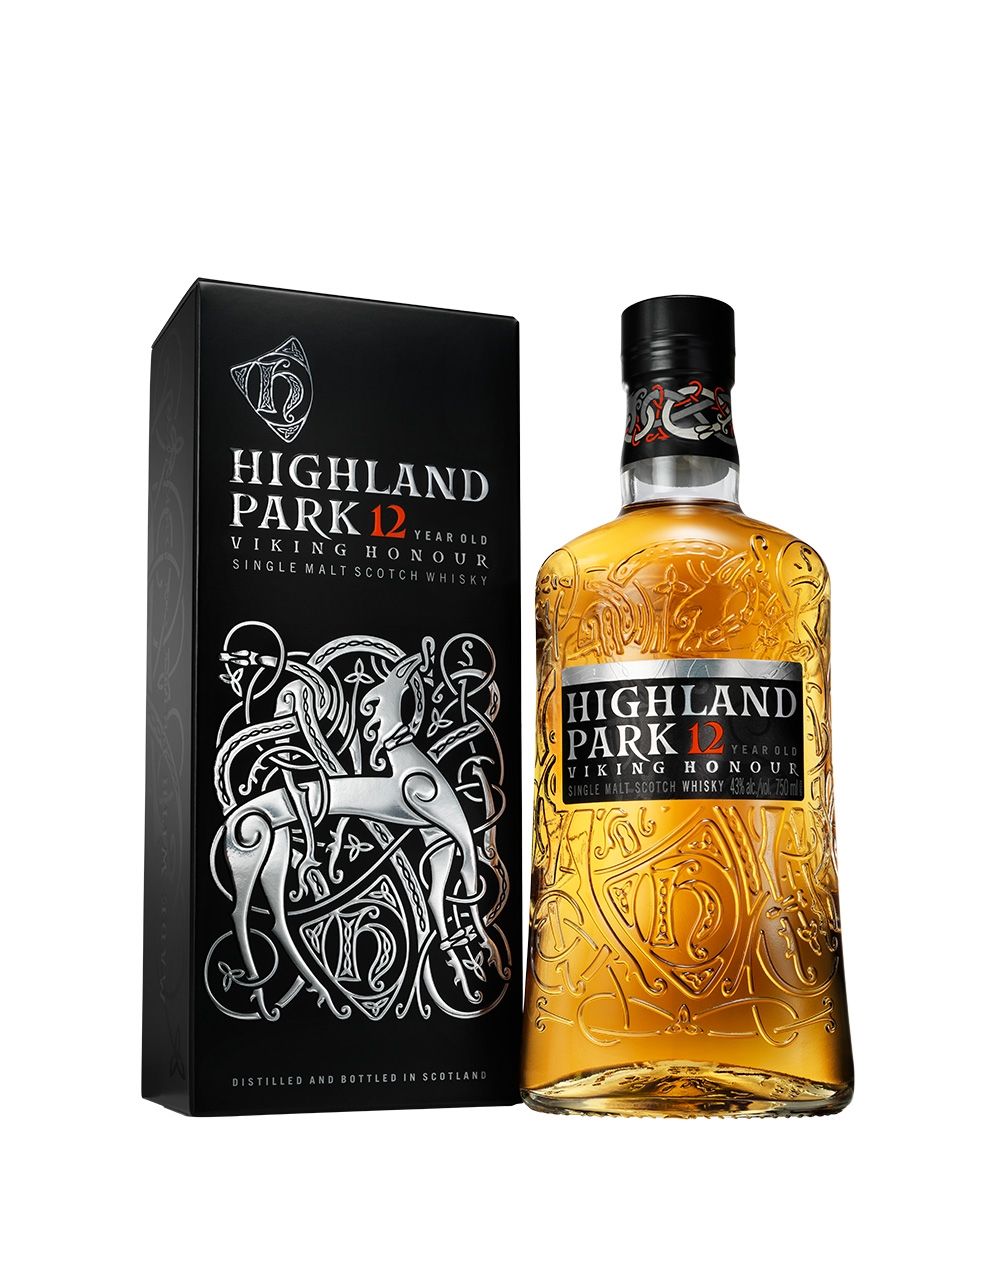 Highland Park 12-Year-Old Single Malt Scotch Whisky bottle and box